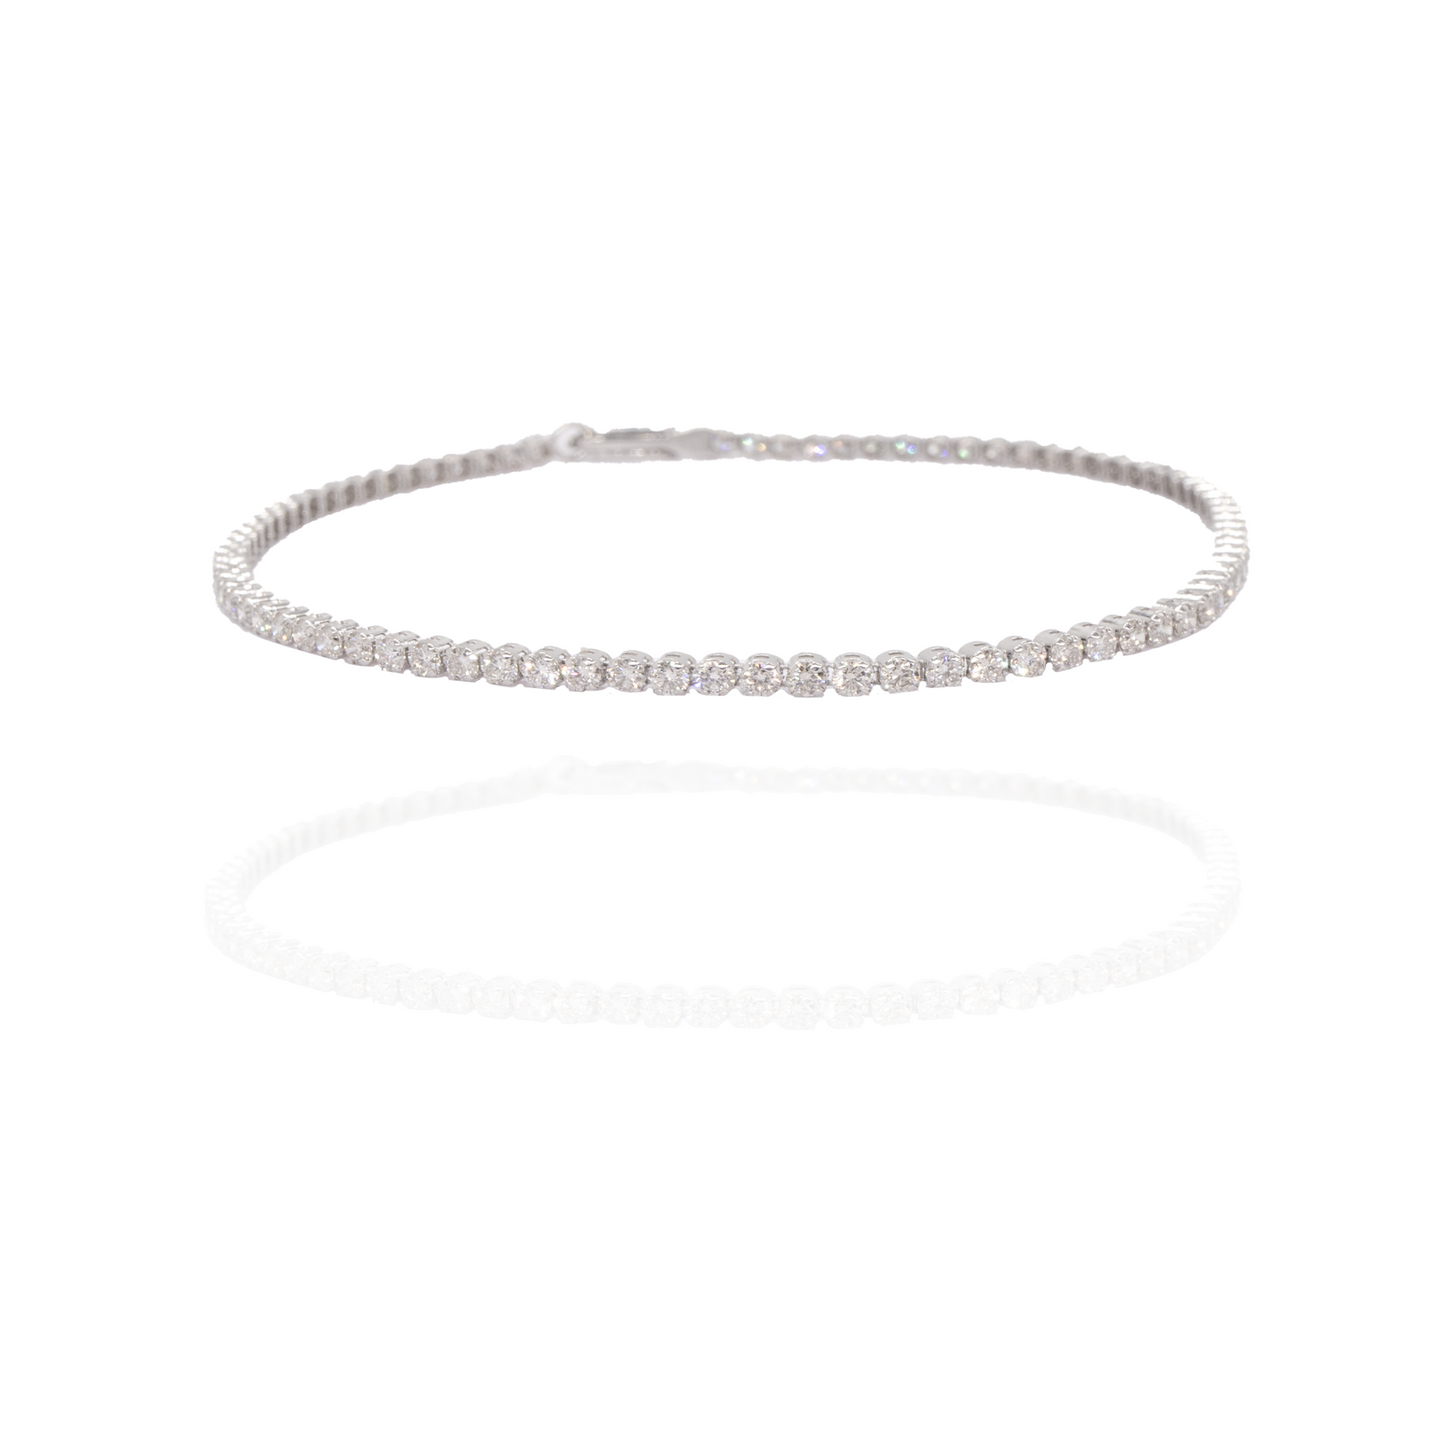 1.20 carats Tennis Bracelet